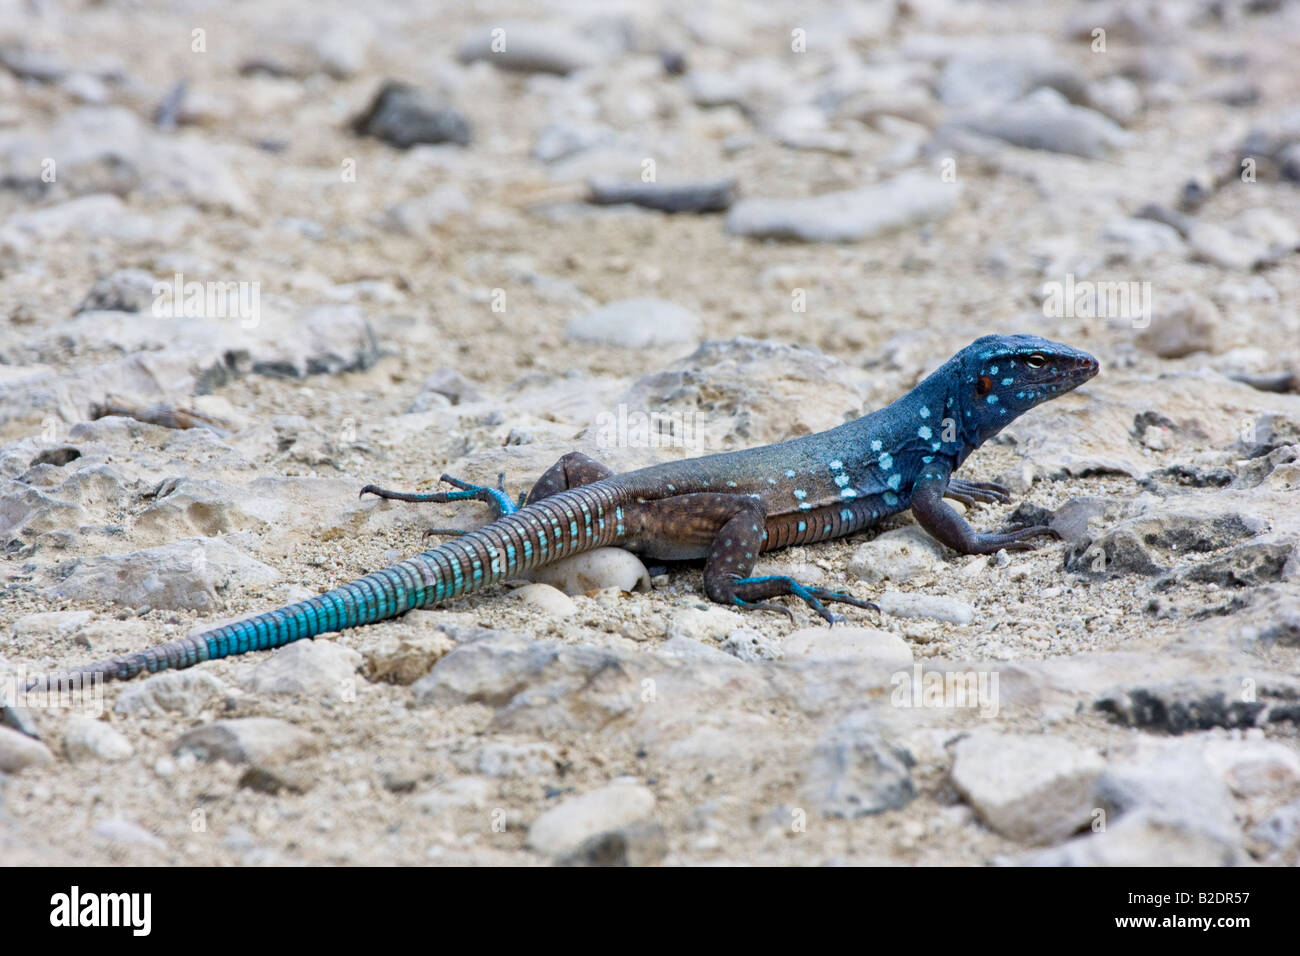 Il blue whiptail lizard, Cnemidophorus murinus ruthveni è endemica a Bonaire, Bonaire, Antille olandesi, dei Caraibi. Foto Stock